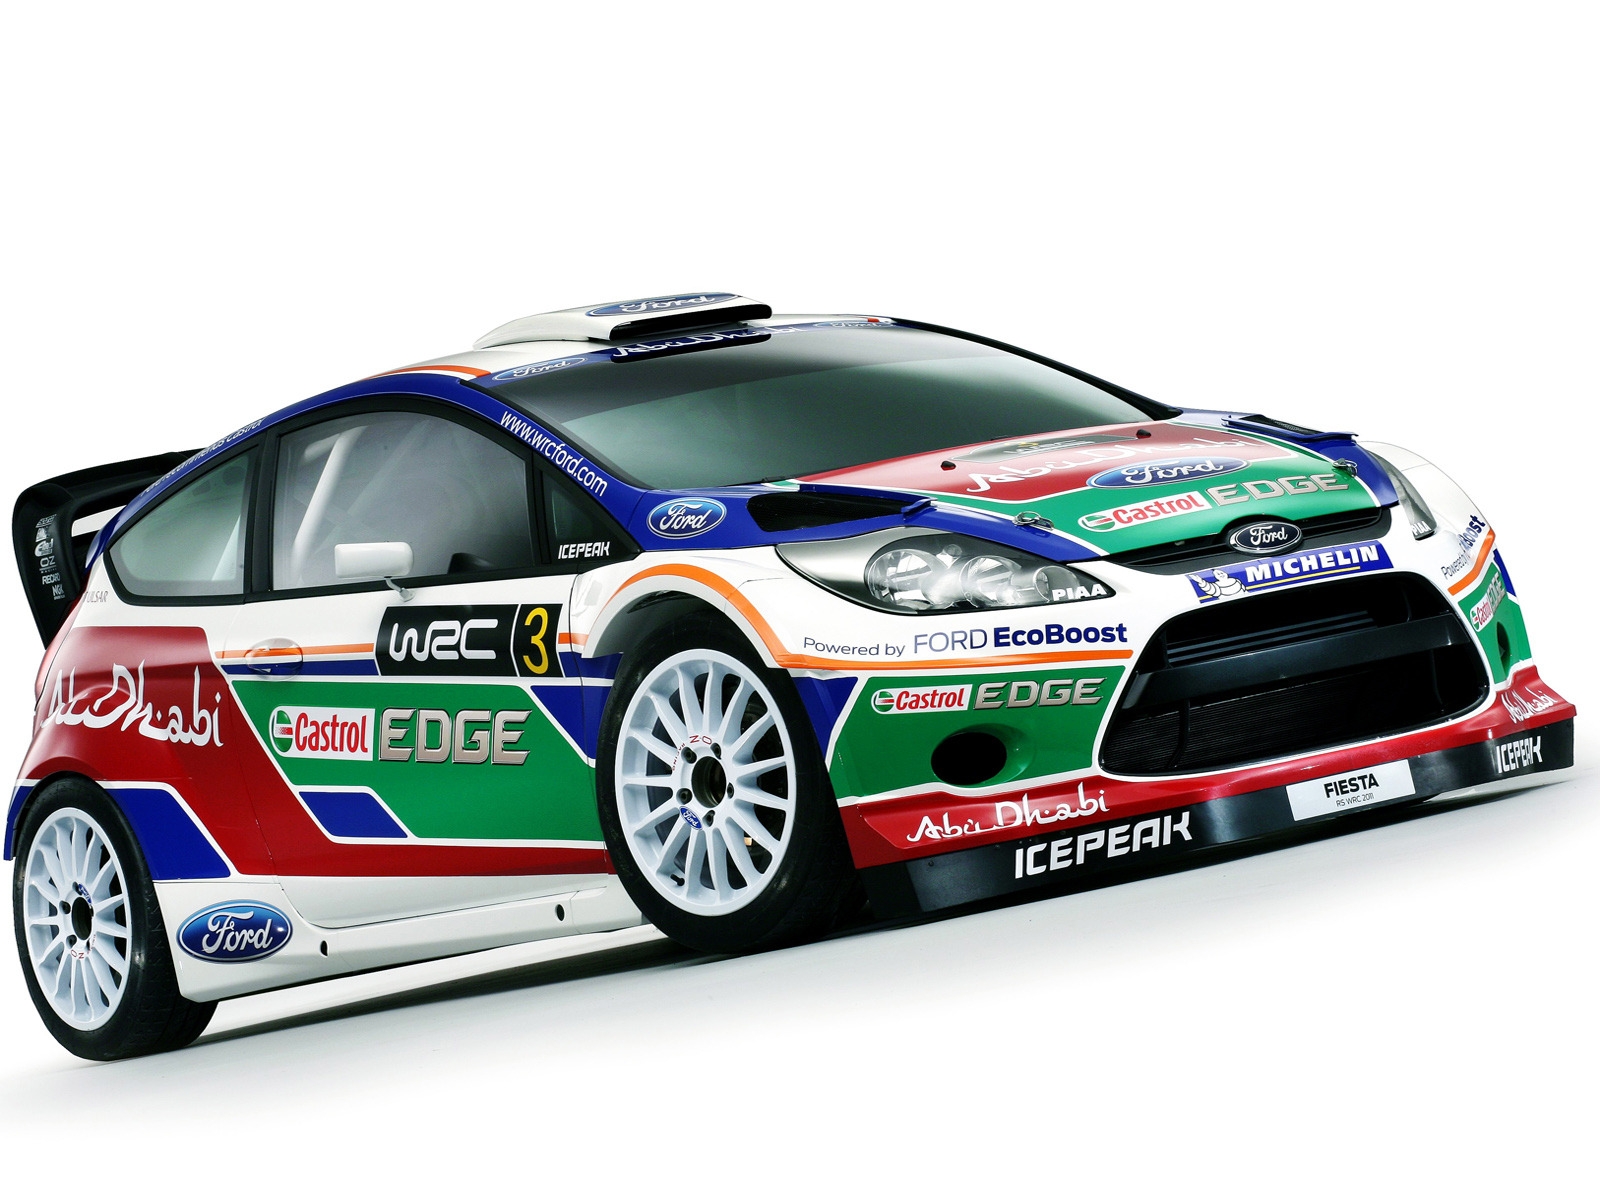 Ford Fiesta WRC for 1600 x 1200 resolution